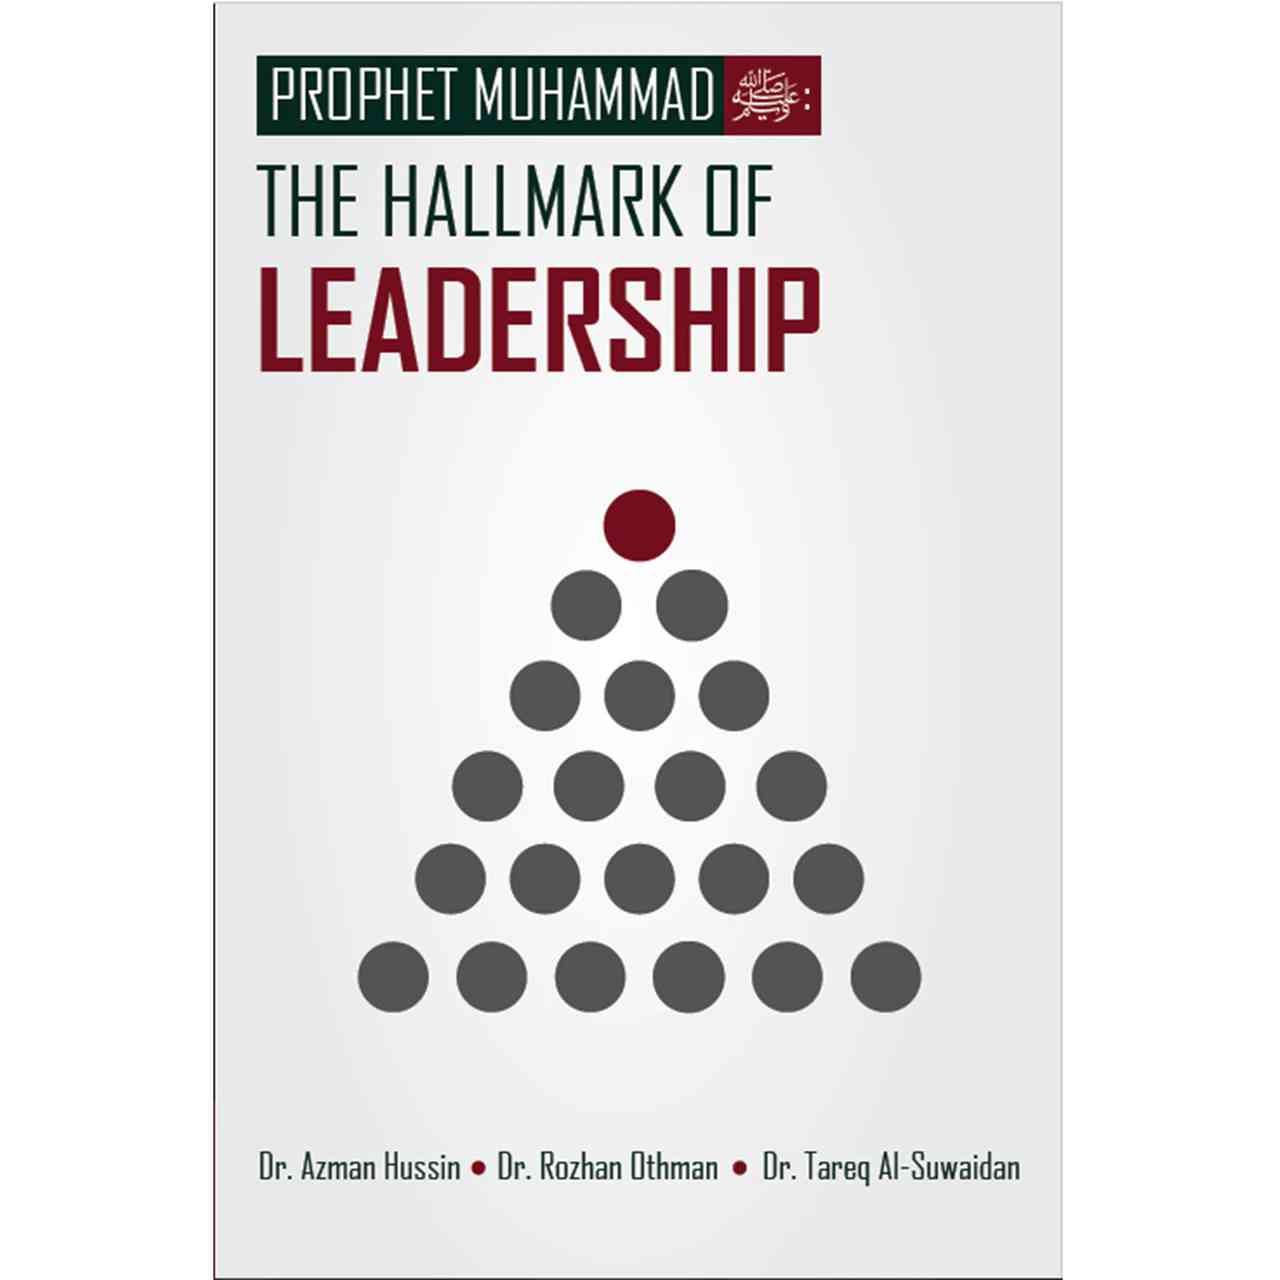 Prophet Muhammad: The Hallmark of Leadership by Azman Hussin